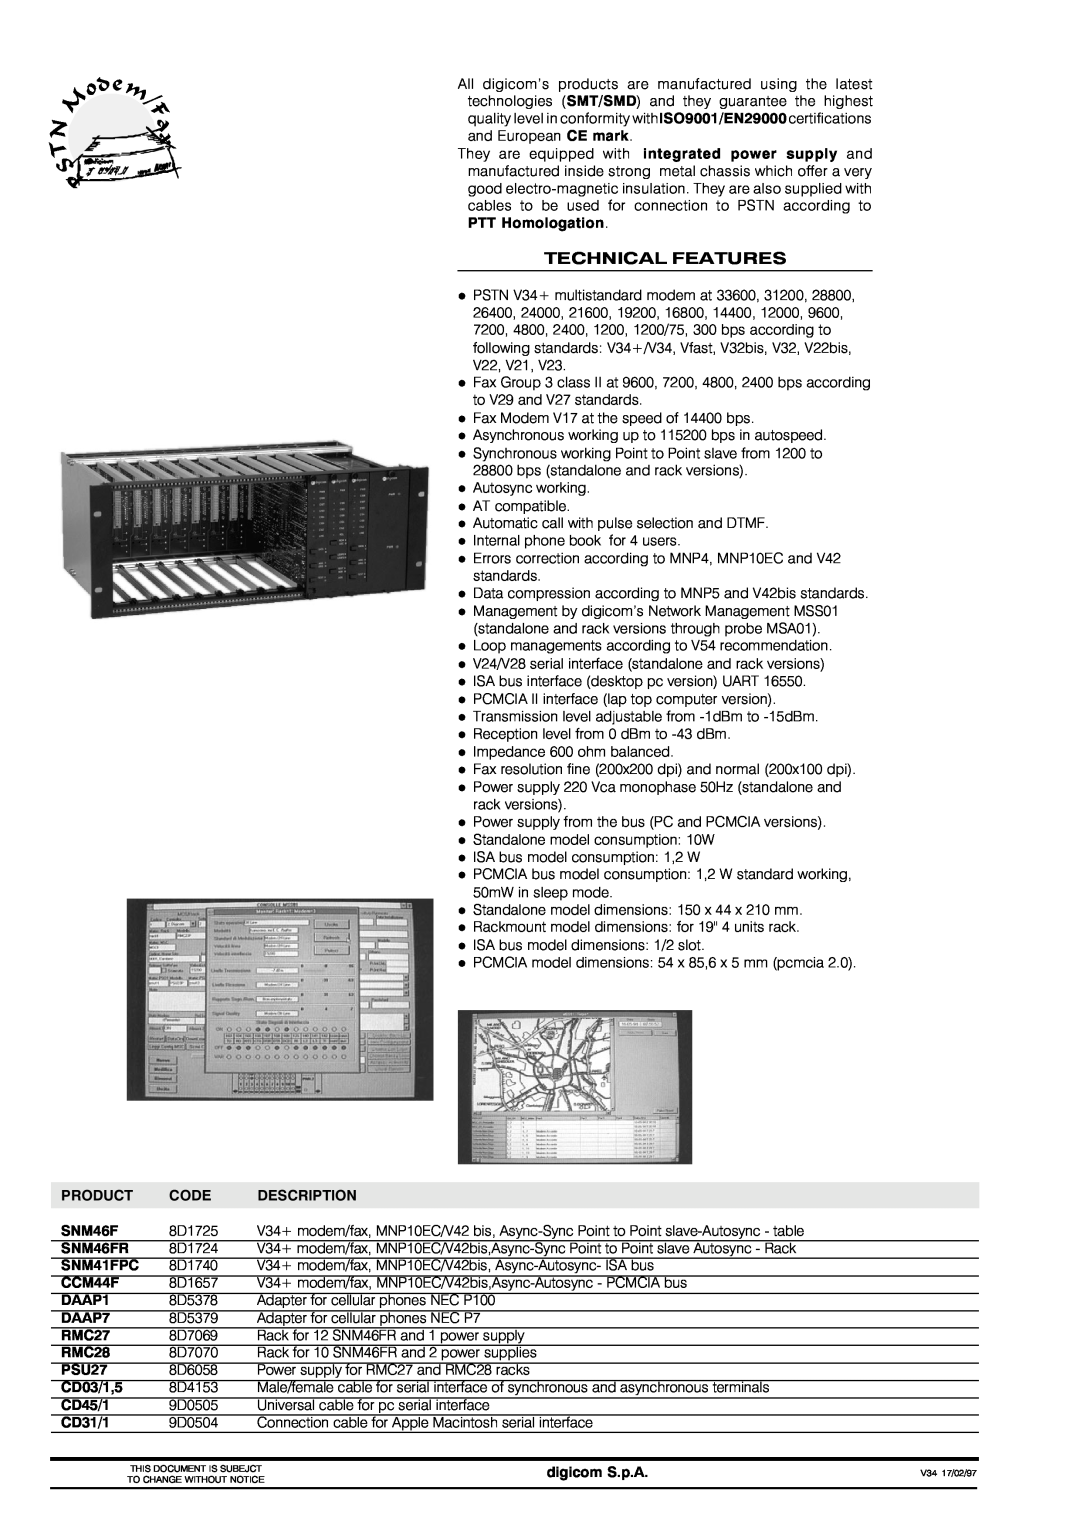 Digicom SNM46F manual Technical Features 